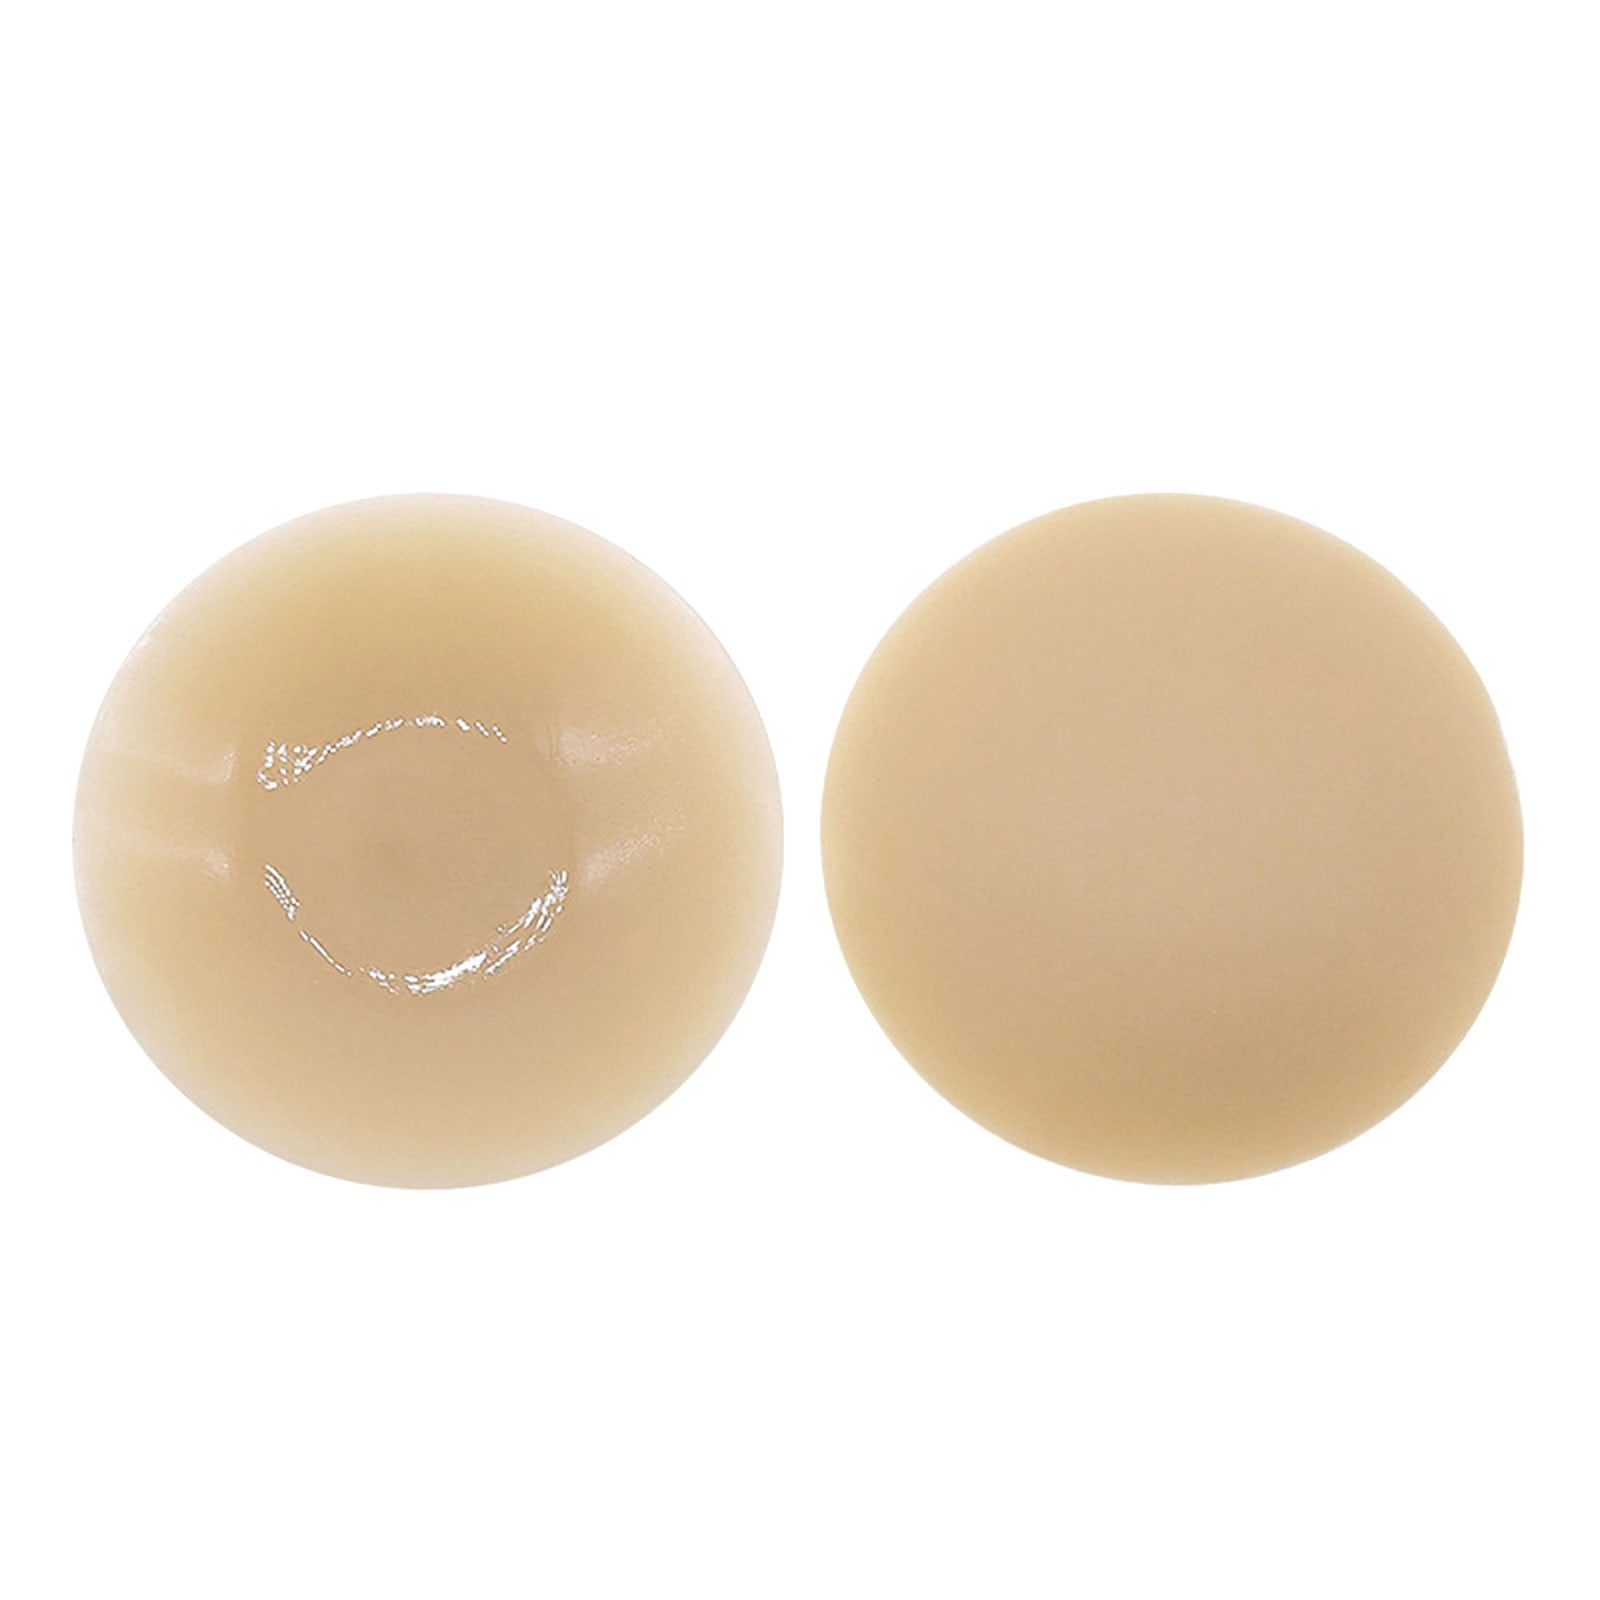 BallsFHK Women's Nipple Covers Reusable Strong Adhesive Silicone